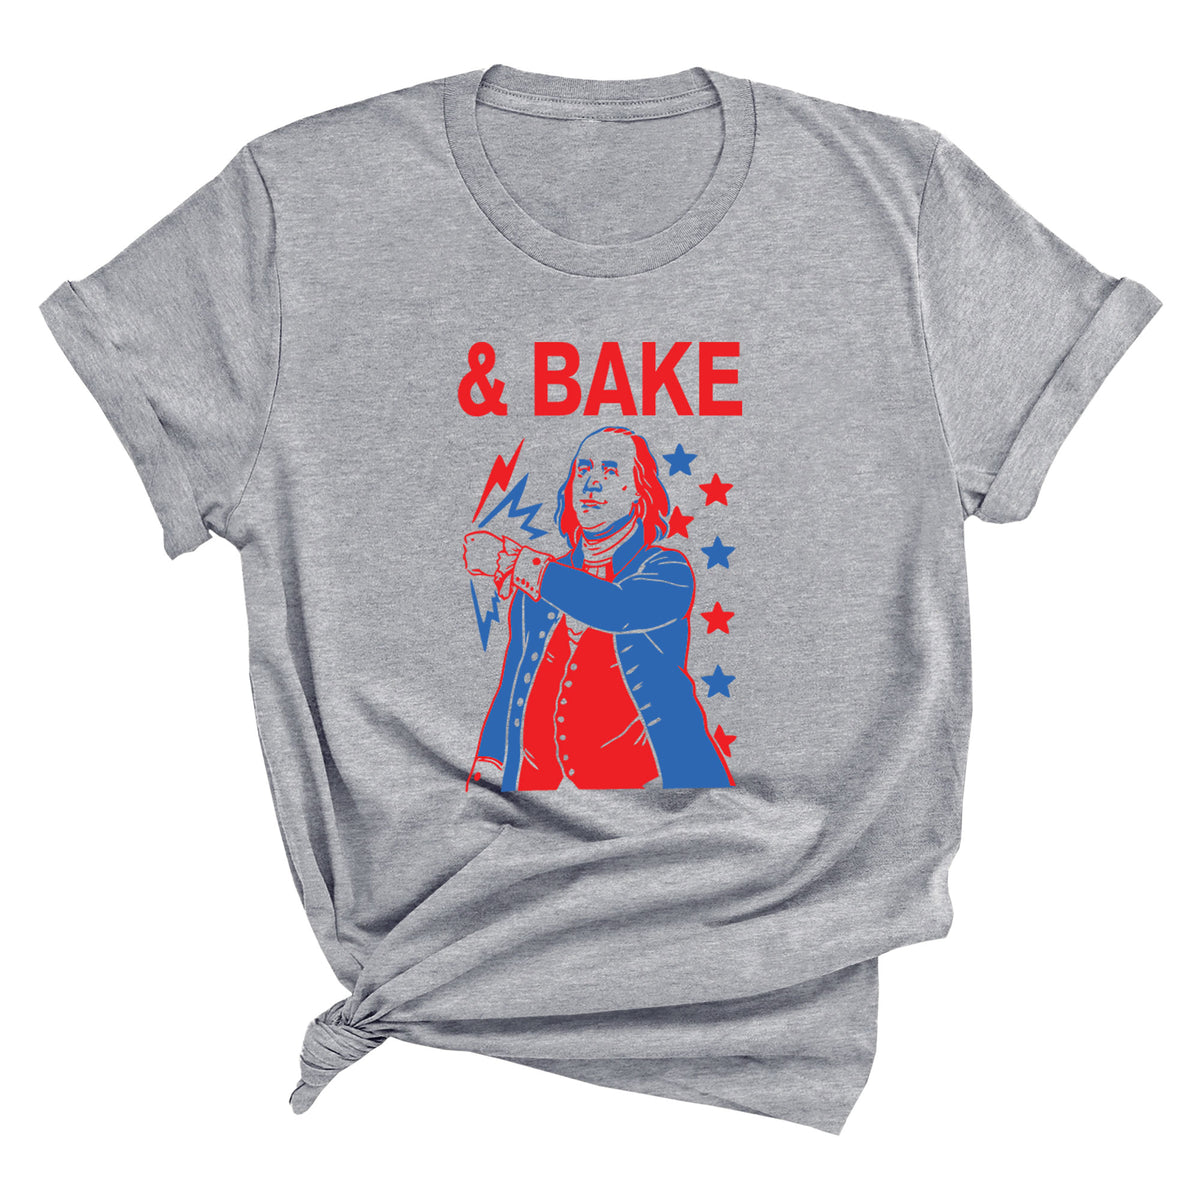 Shake & Bake Unisex T-Shirt